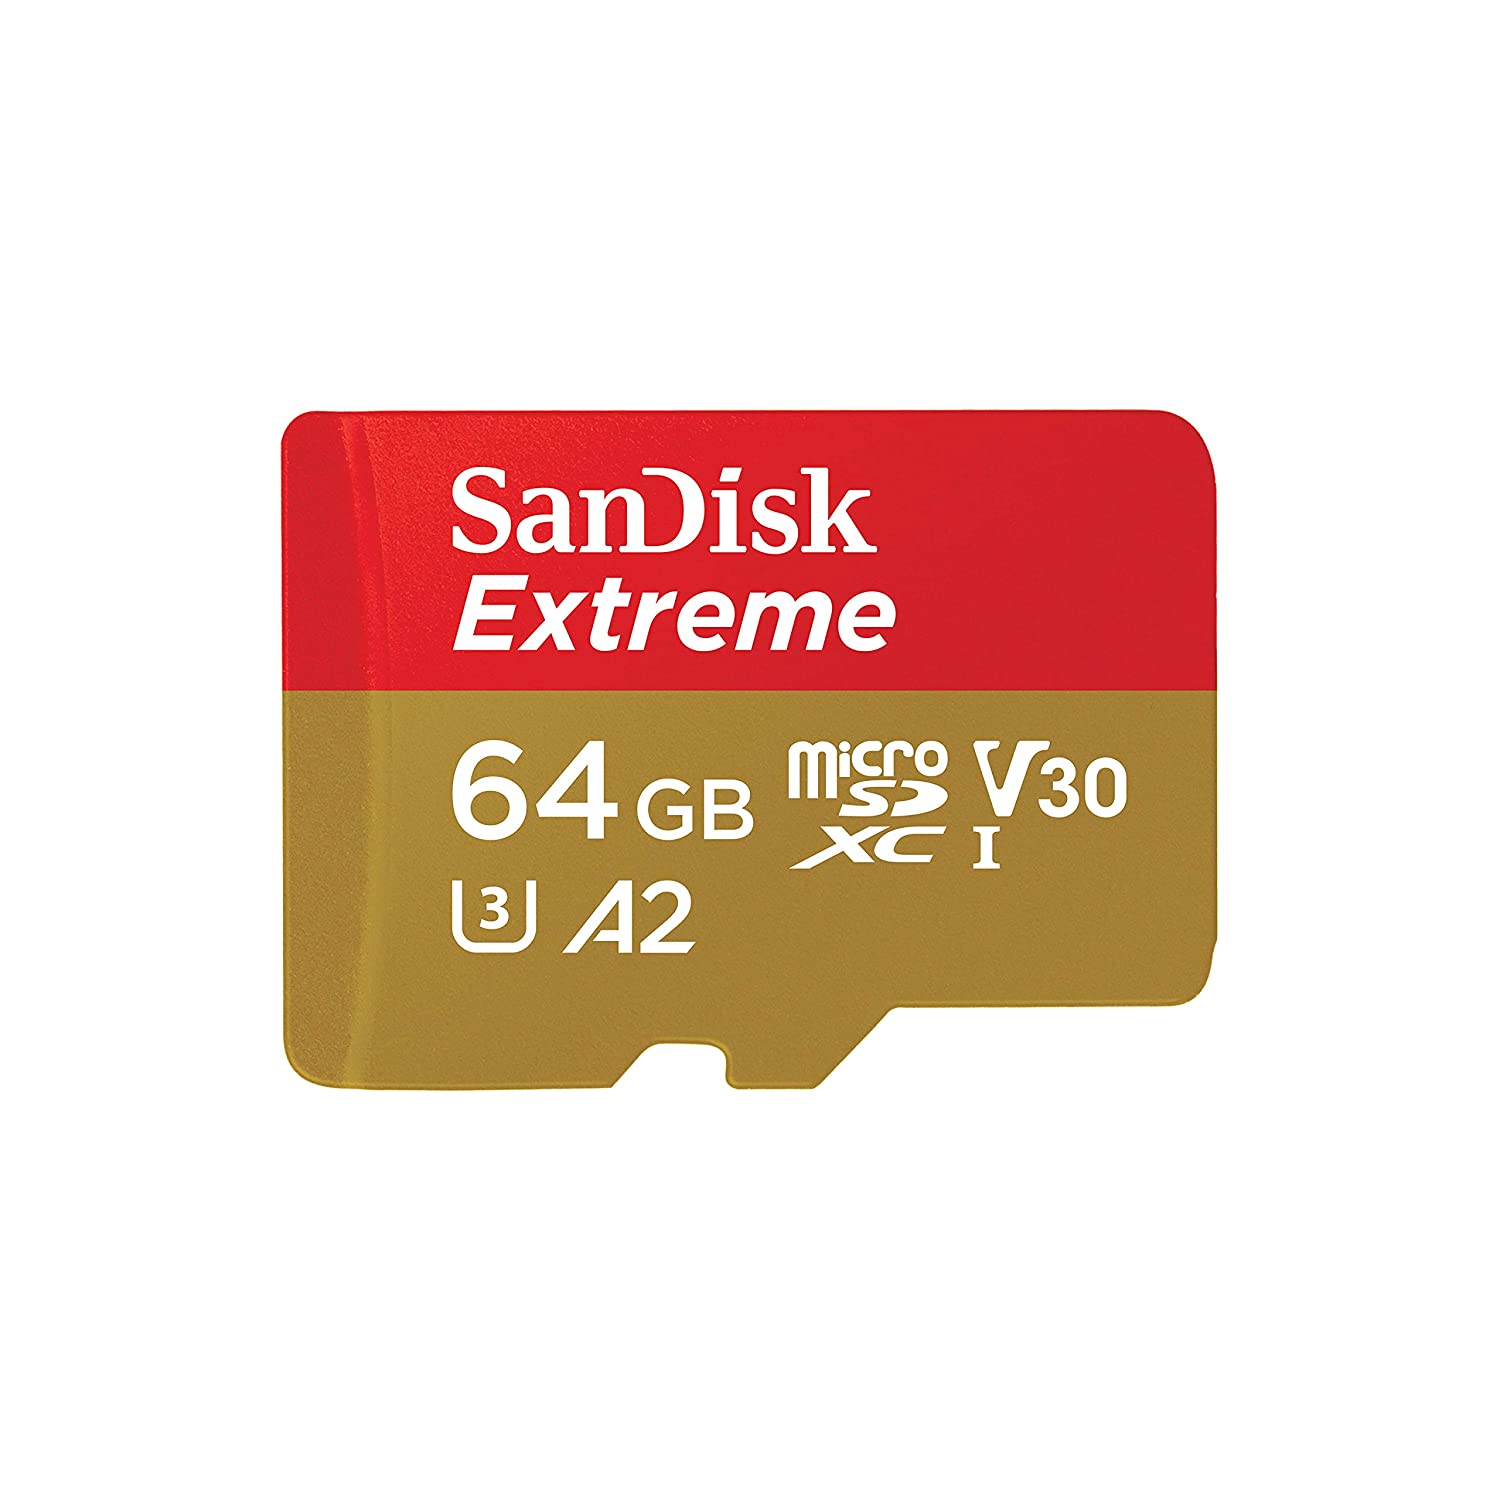 SanDisk 64gb extreme microsdxc U3 C10 V30 A2 card - The Camerashop